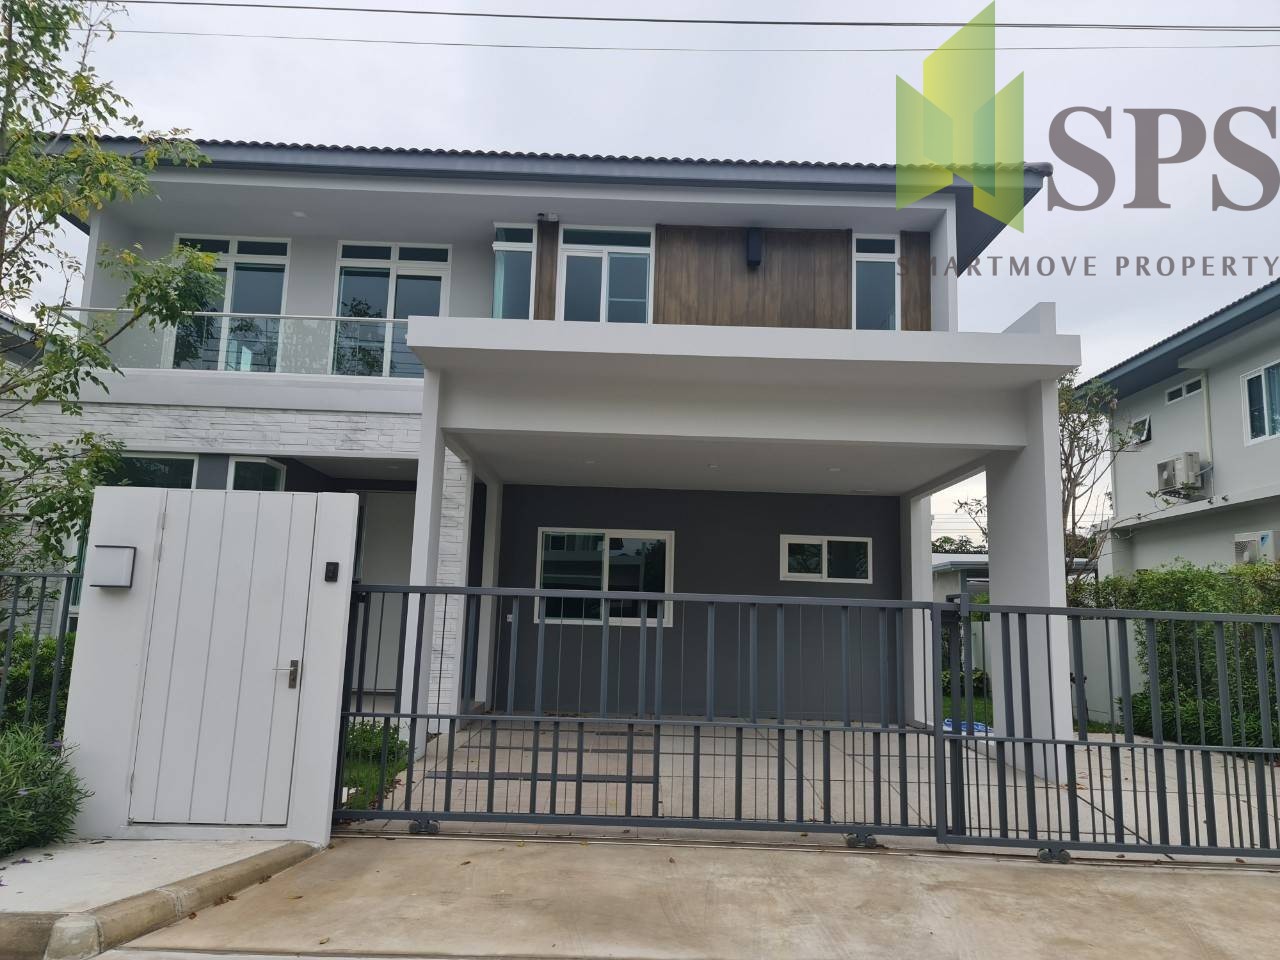 Detached House in Mantana Bangna- Wongwaen for RENT (SPSP439)